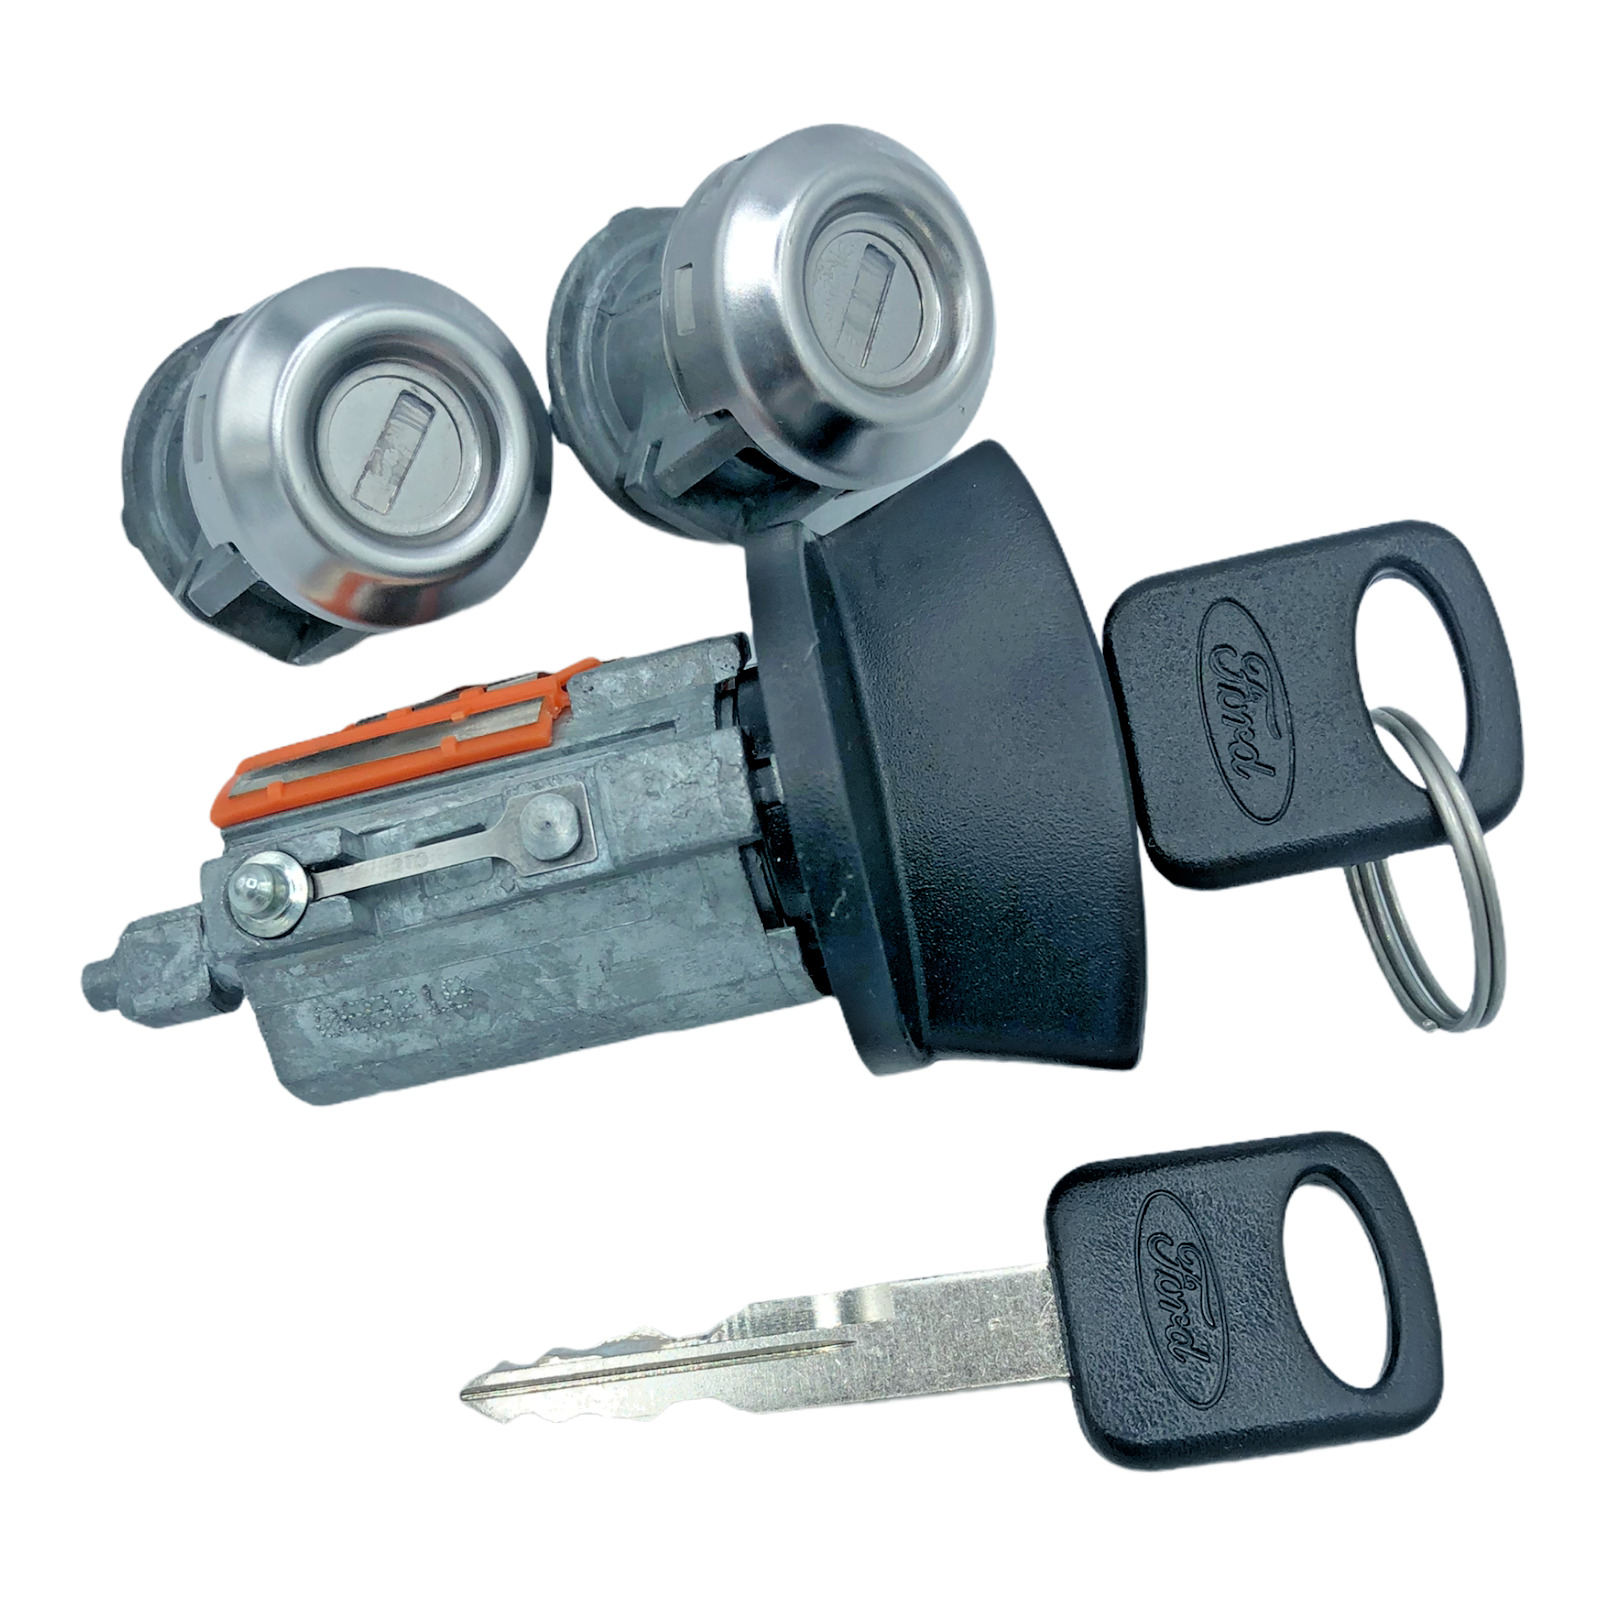 NEW 3-PC Ignition & Door Lock Cylinder Set w/Ford Logo Keys Fits Trucks w/o PATS